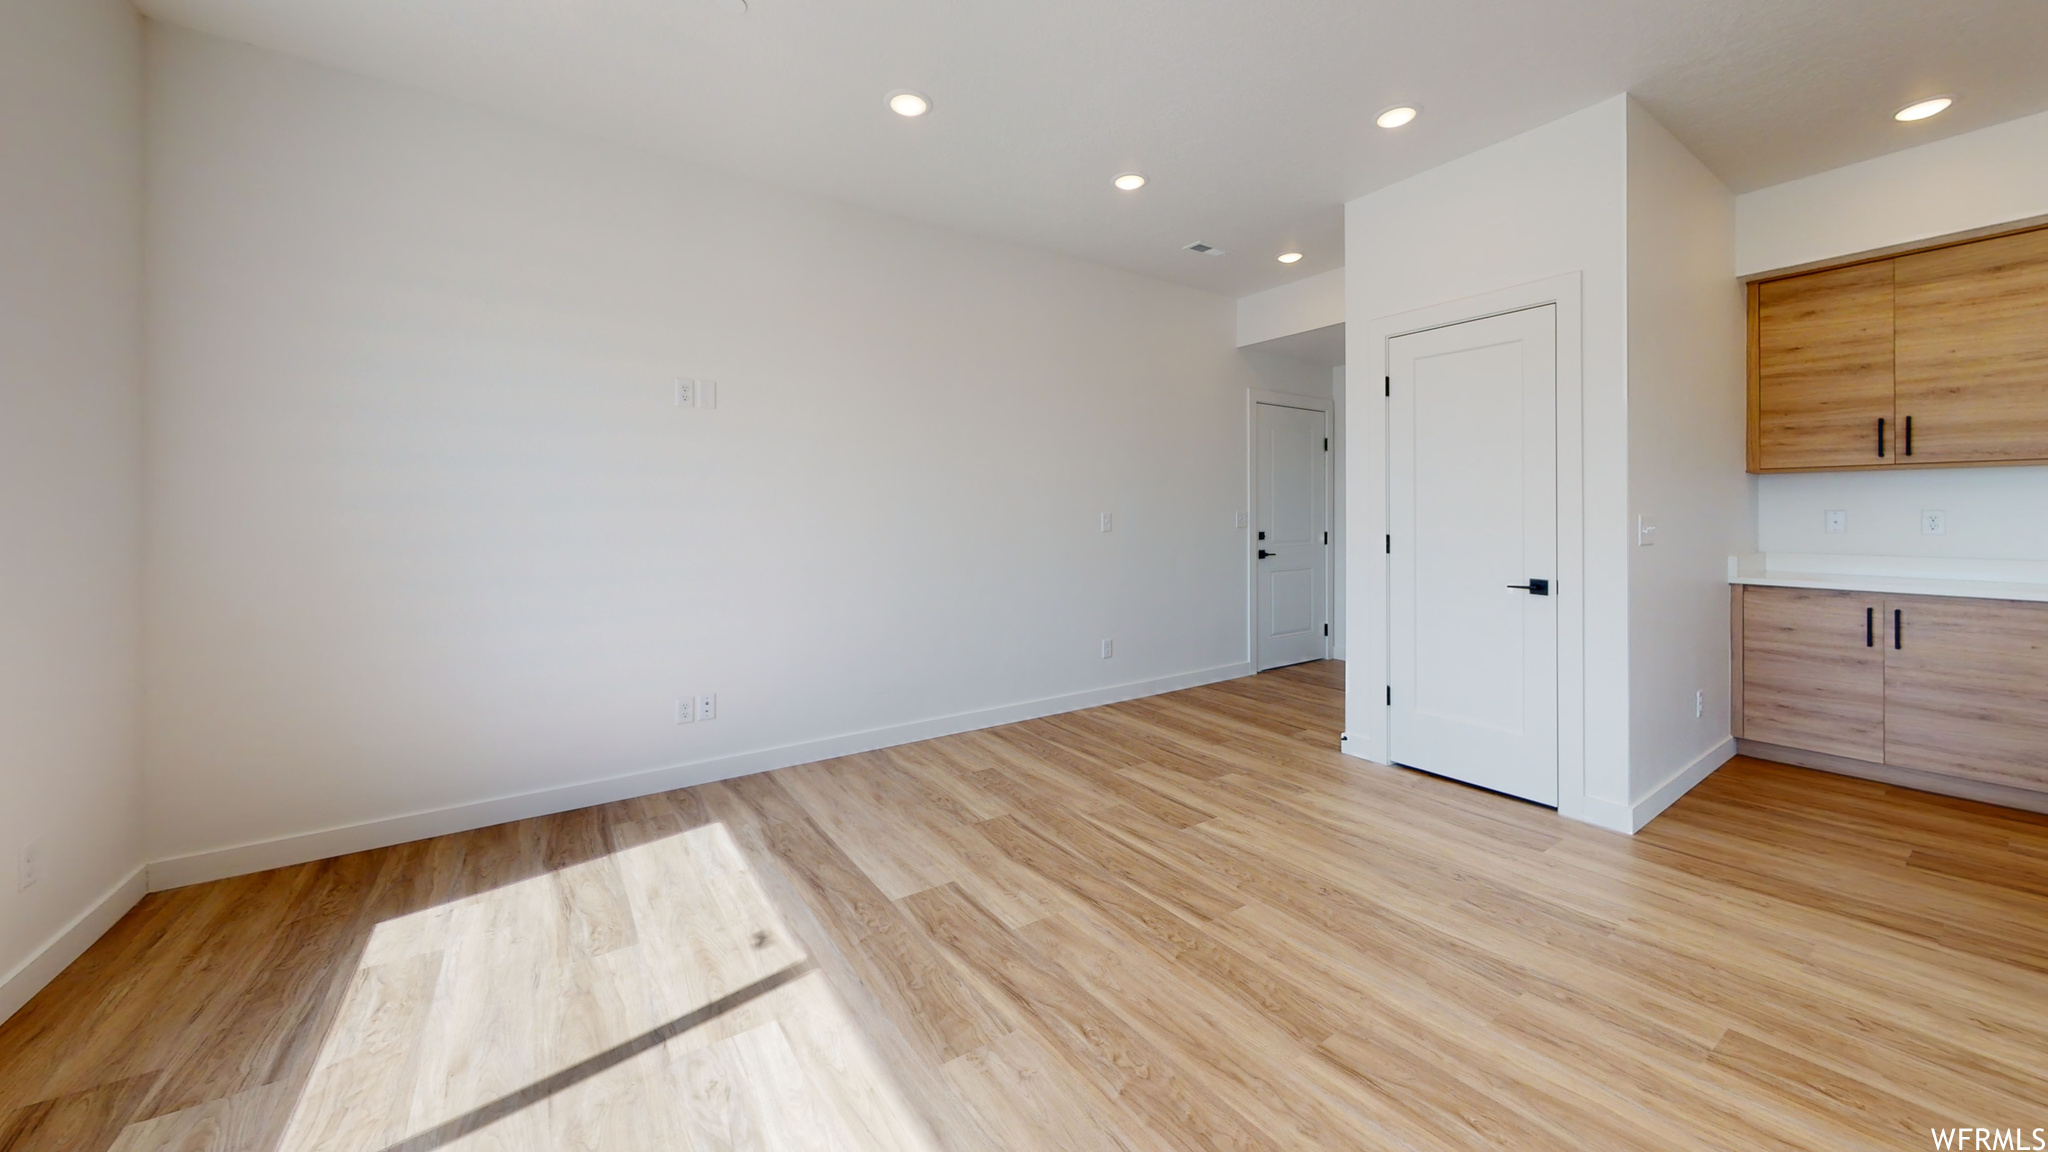 Unfurnished bedroom with light hardwood / wood-style floors